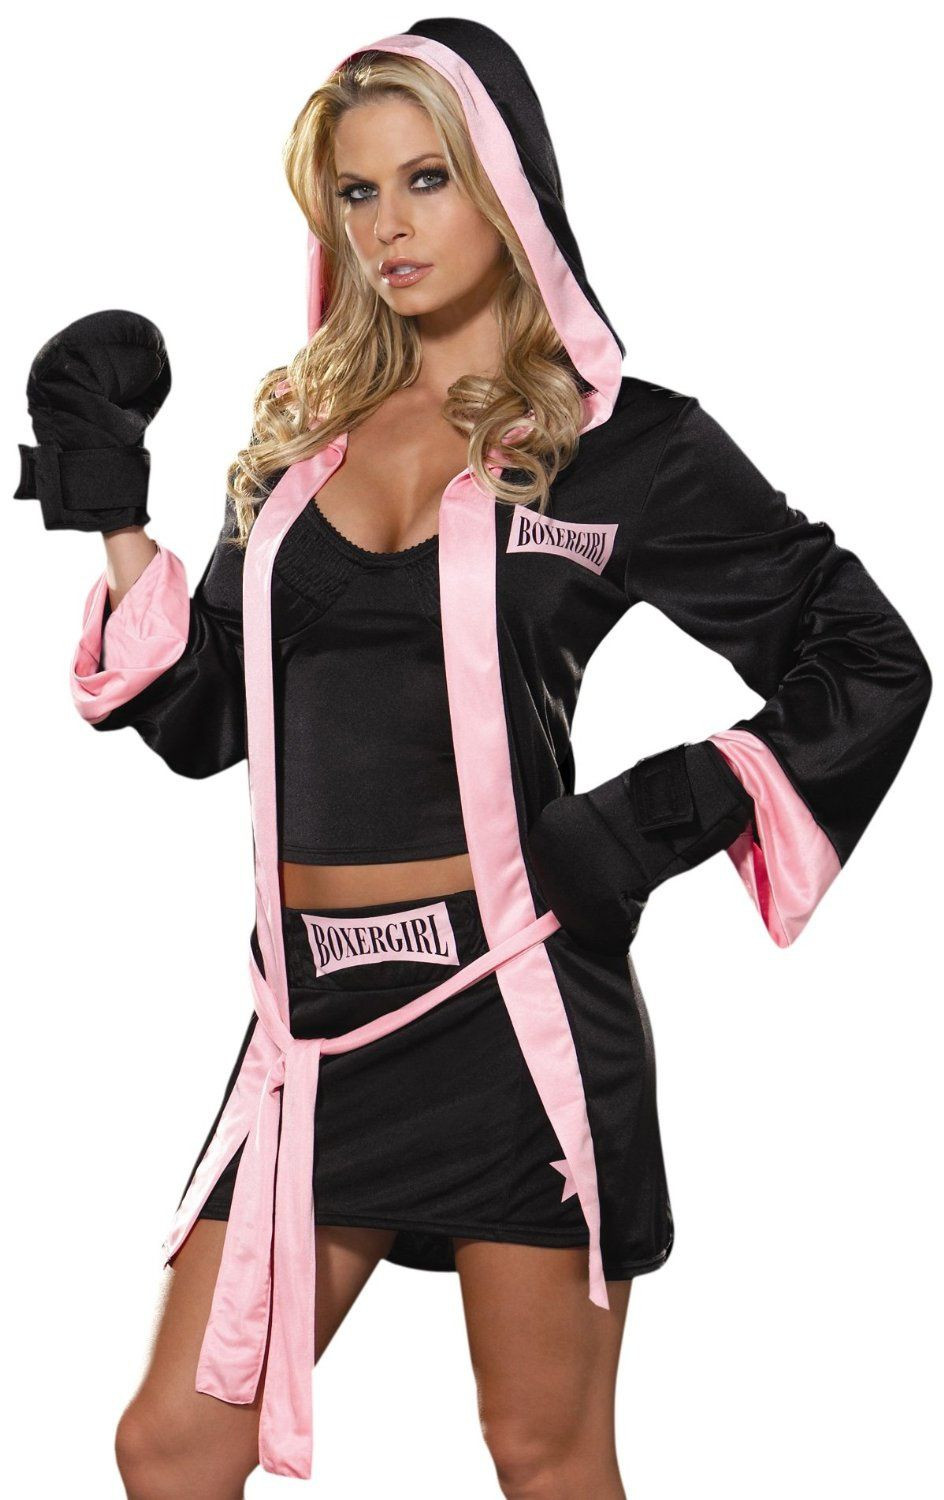 boxer costume girl diy